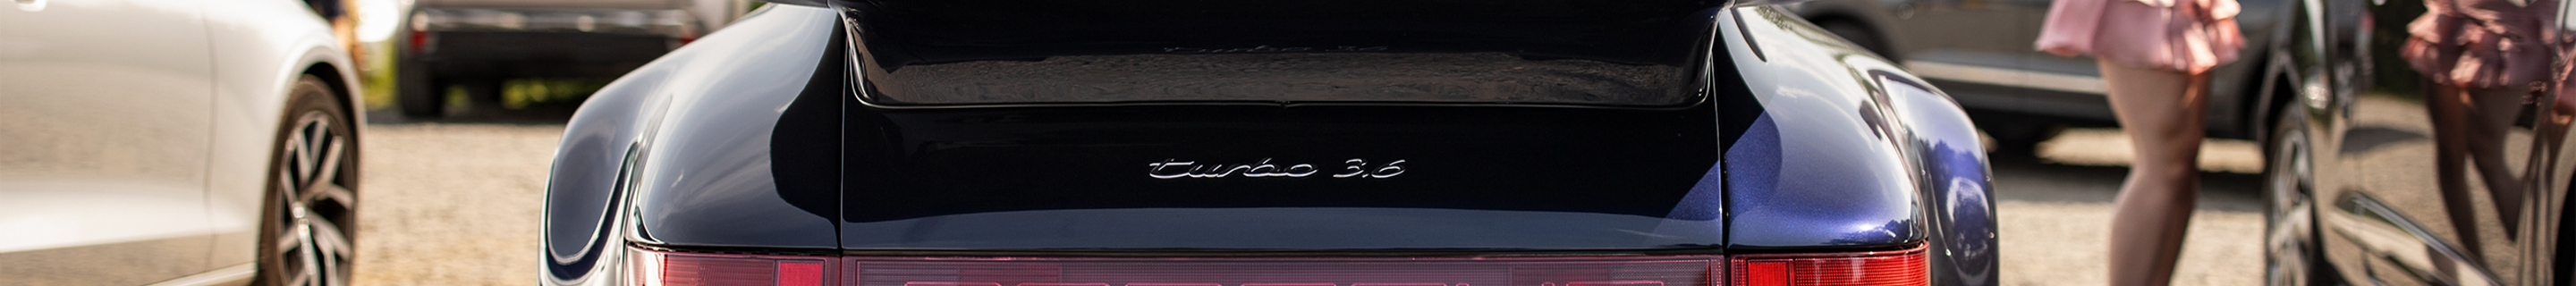 Porsche 964 Turbo S 3.6